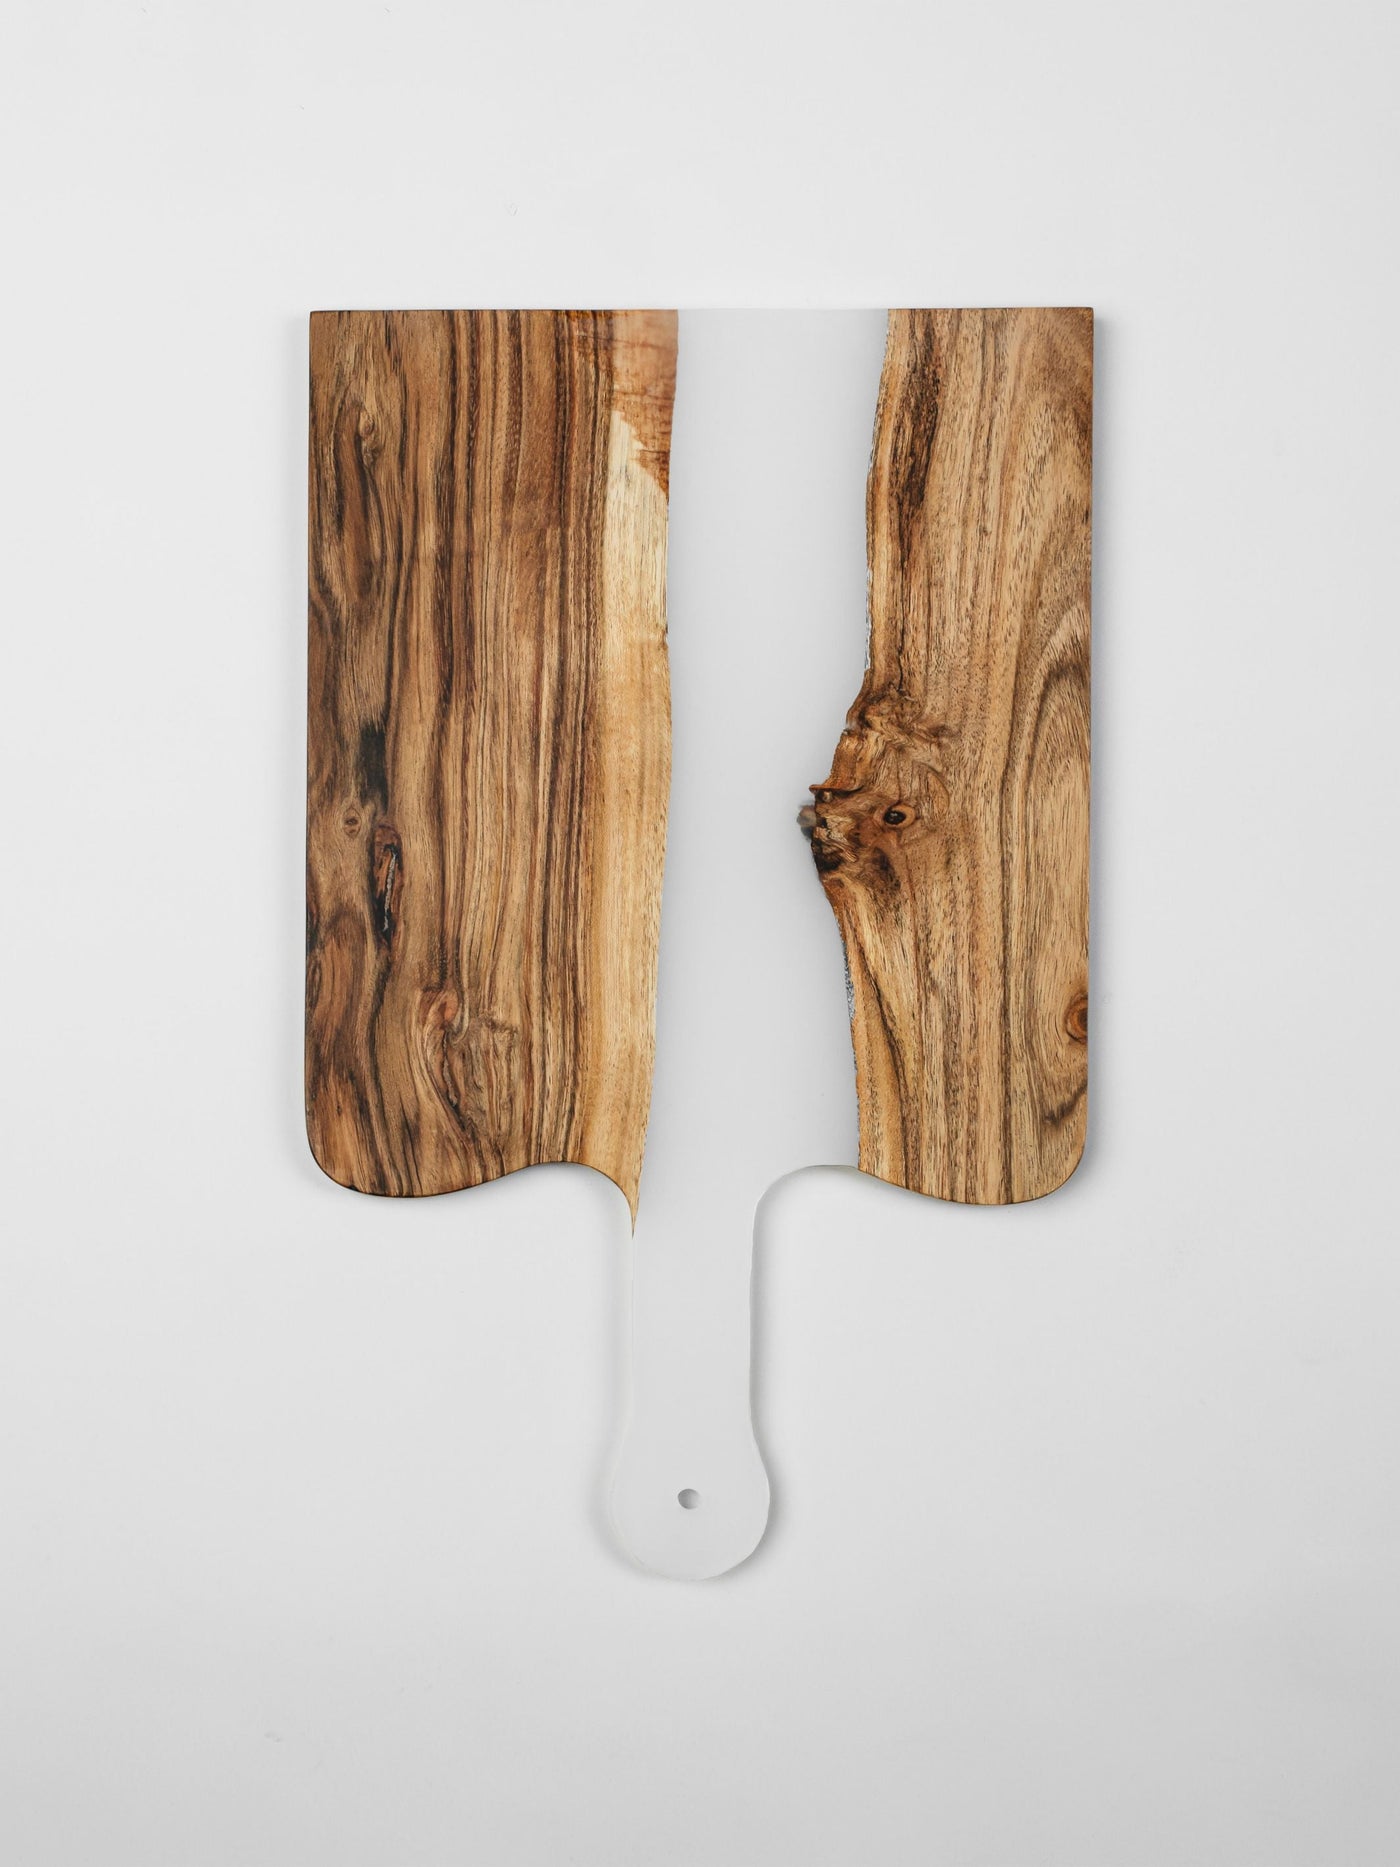 Icicle Wood-Epoxy Platter with Padddle